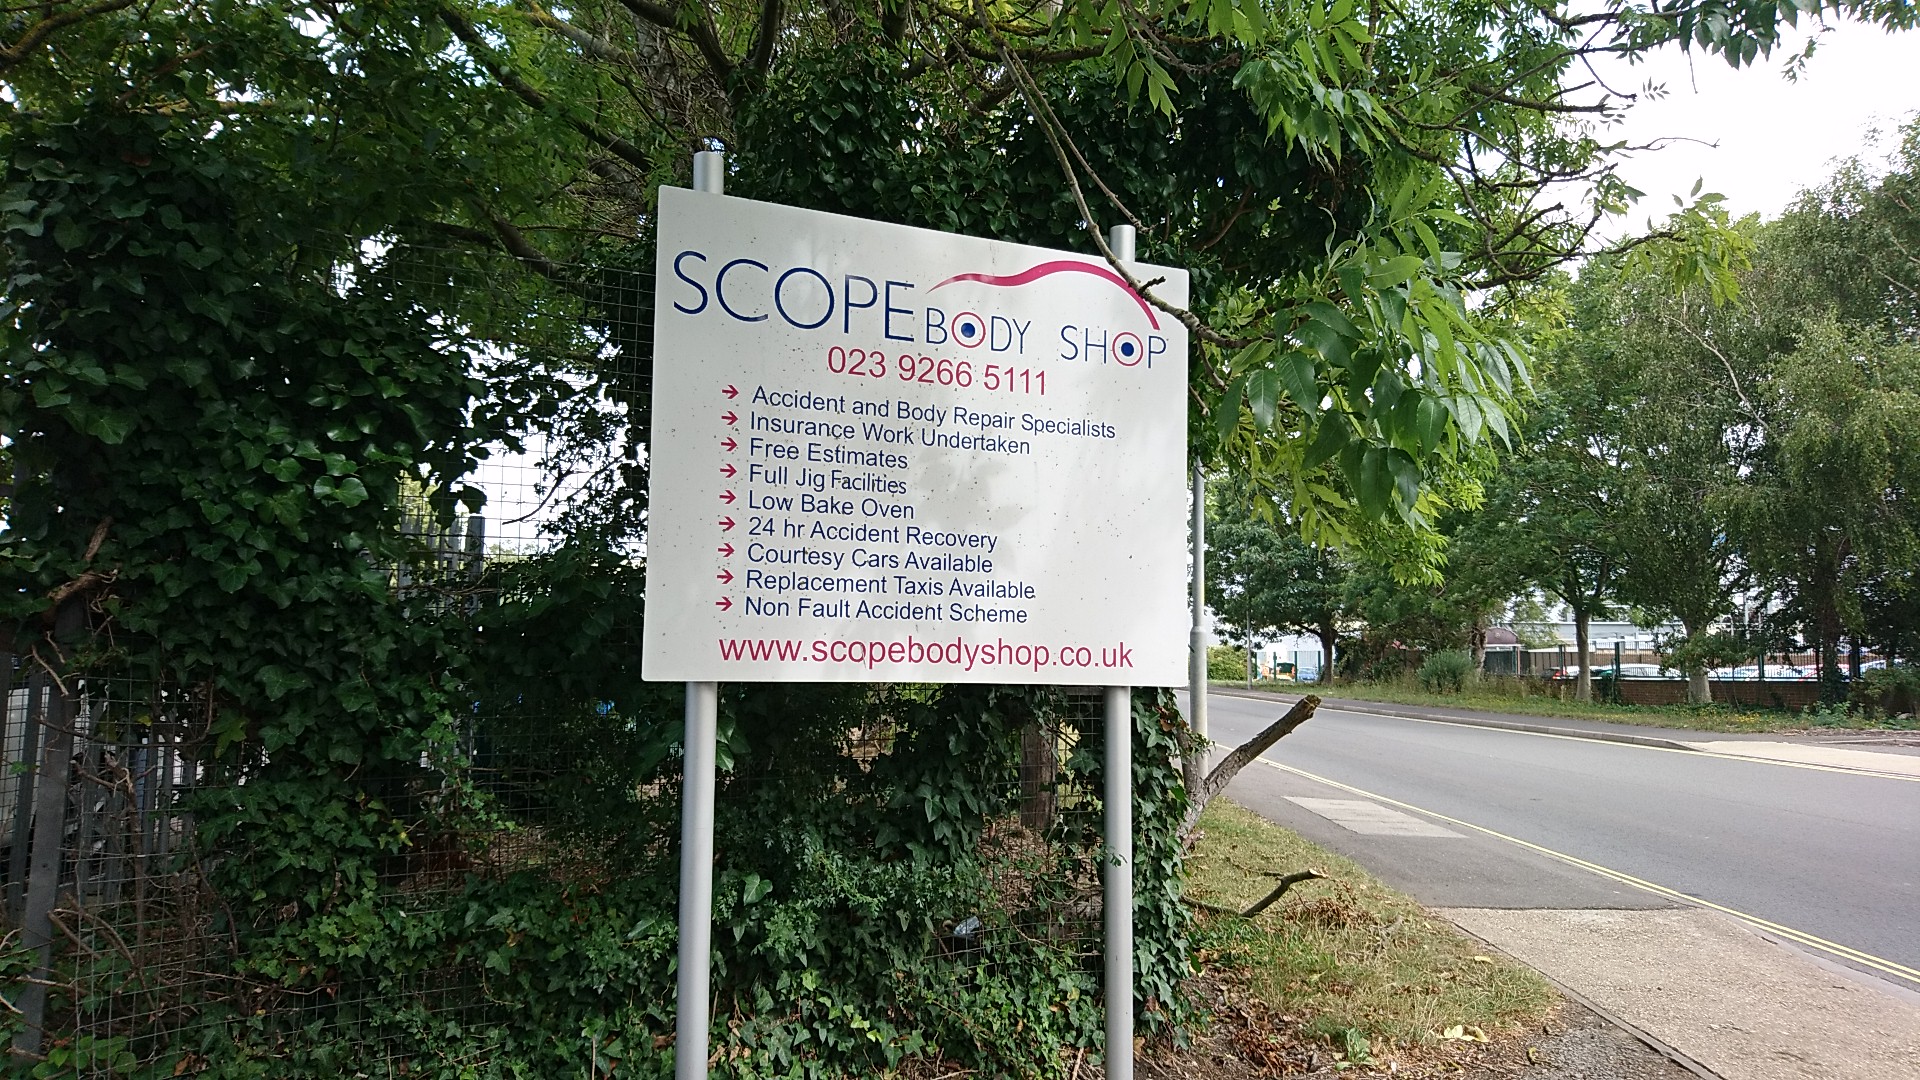 Scope Bodyshop Ltd